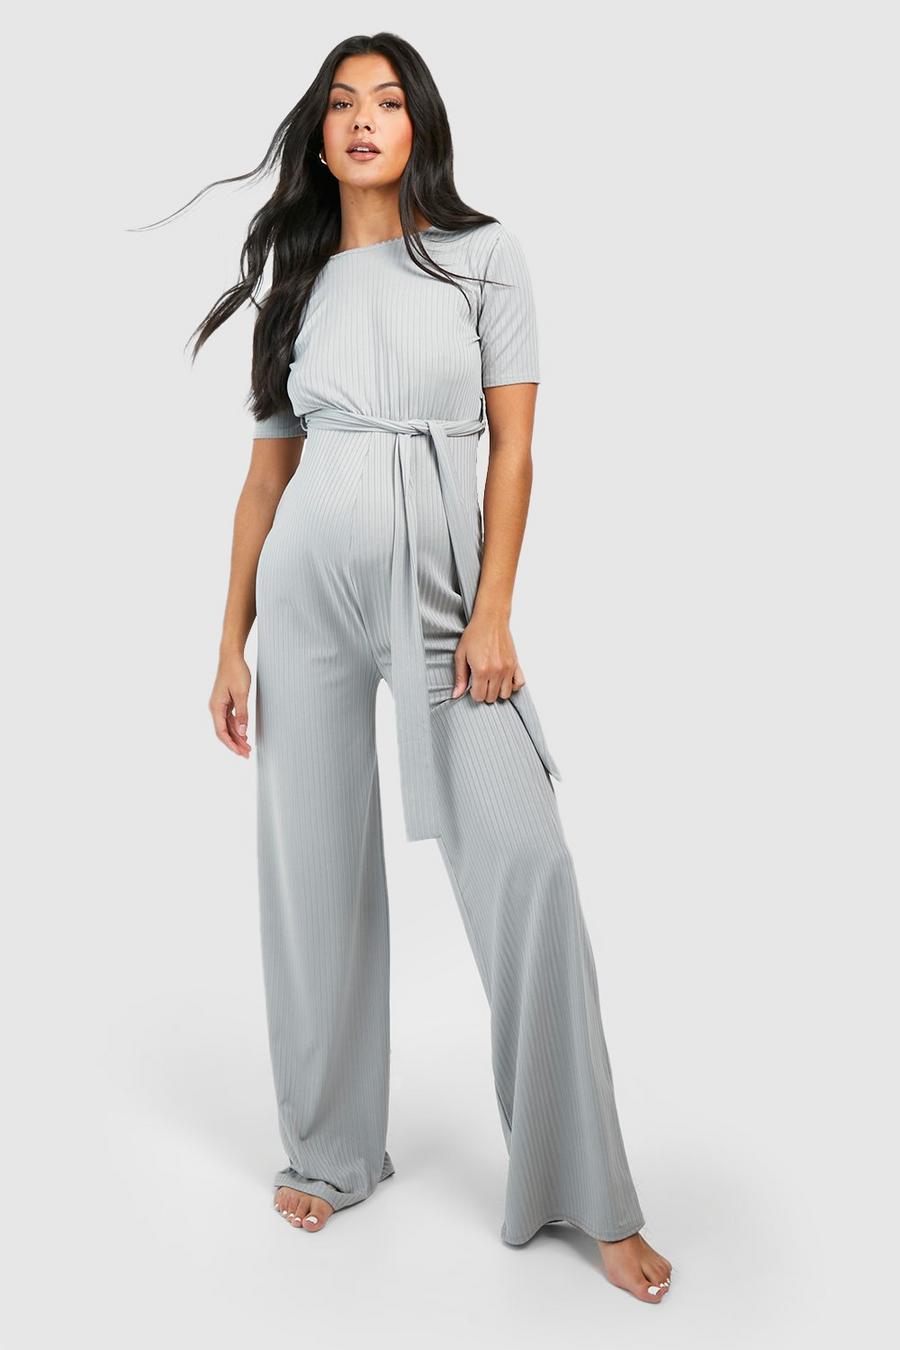 Grey marl Maternity Short Sleeve Belted Loungewear Jumpsuit